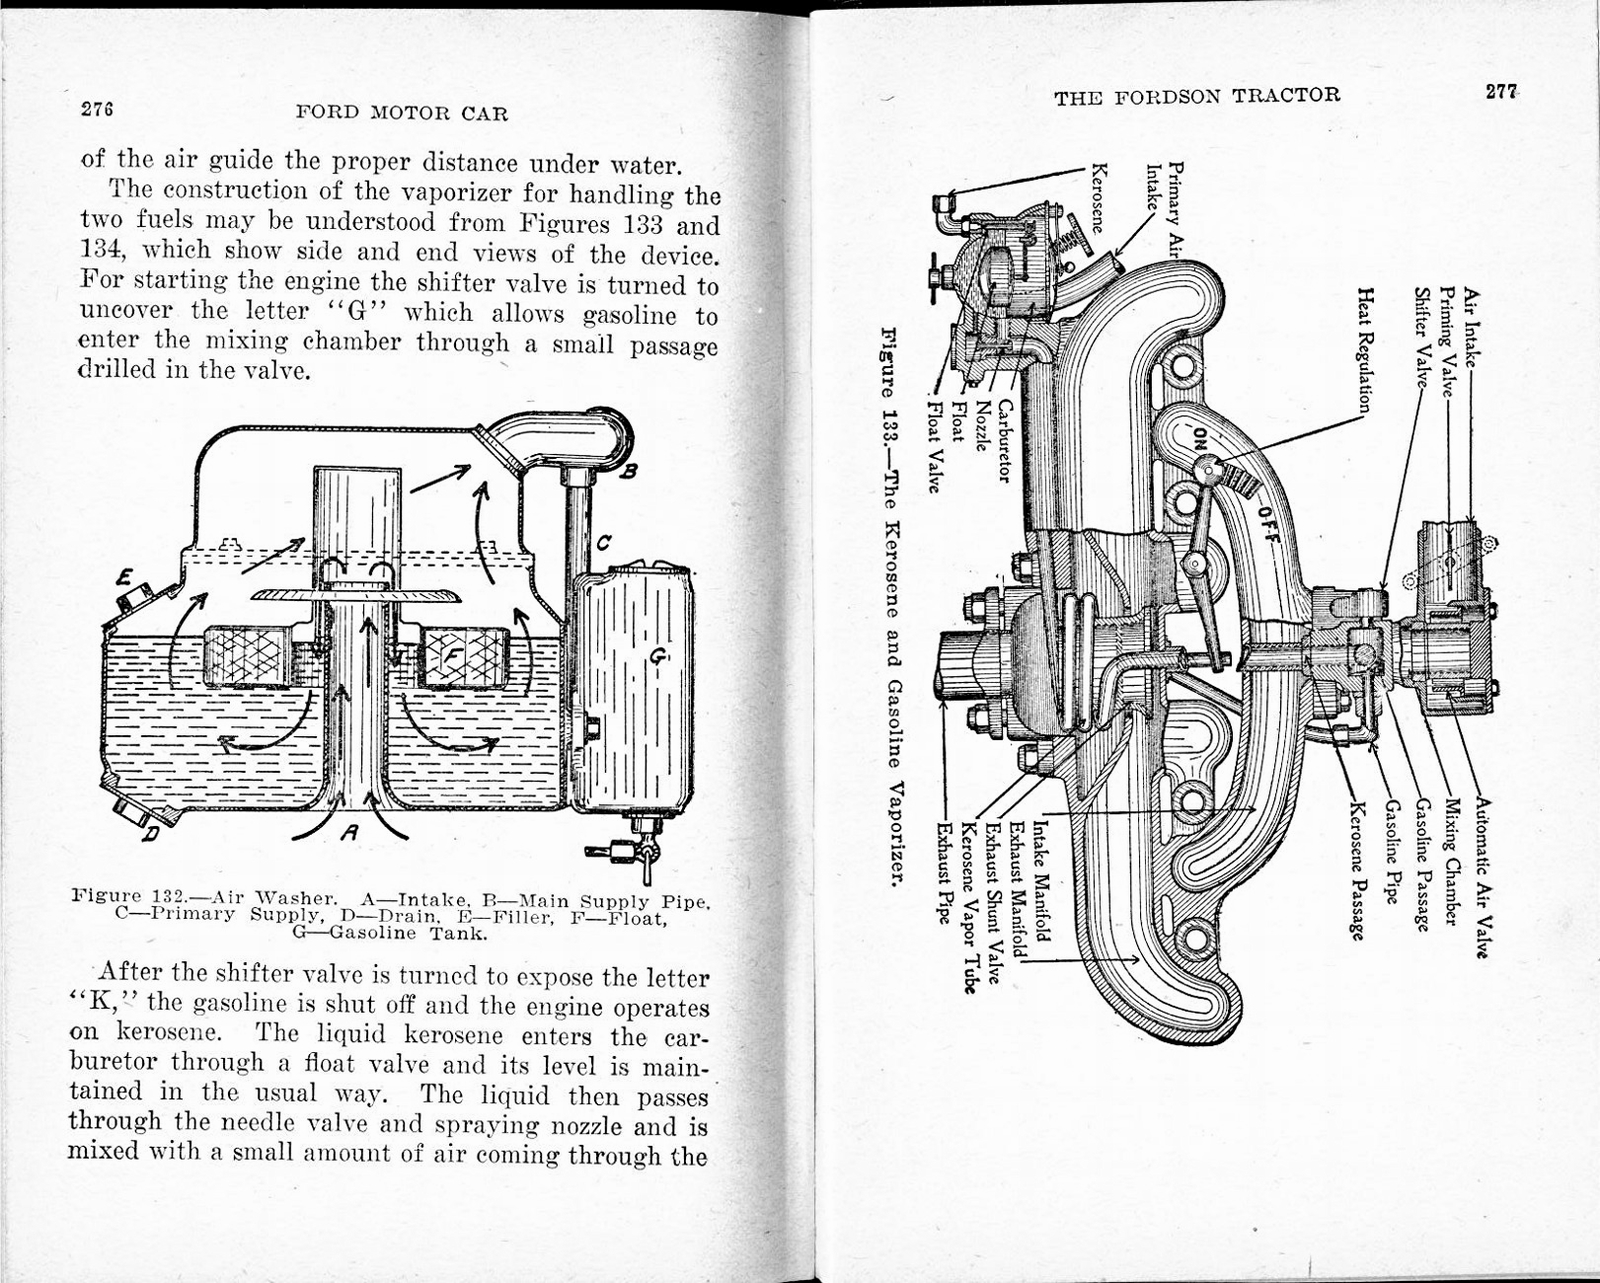 n_1917 Ford Car & Truck Manual-276-277.jpg